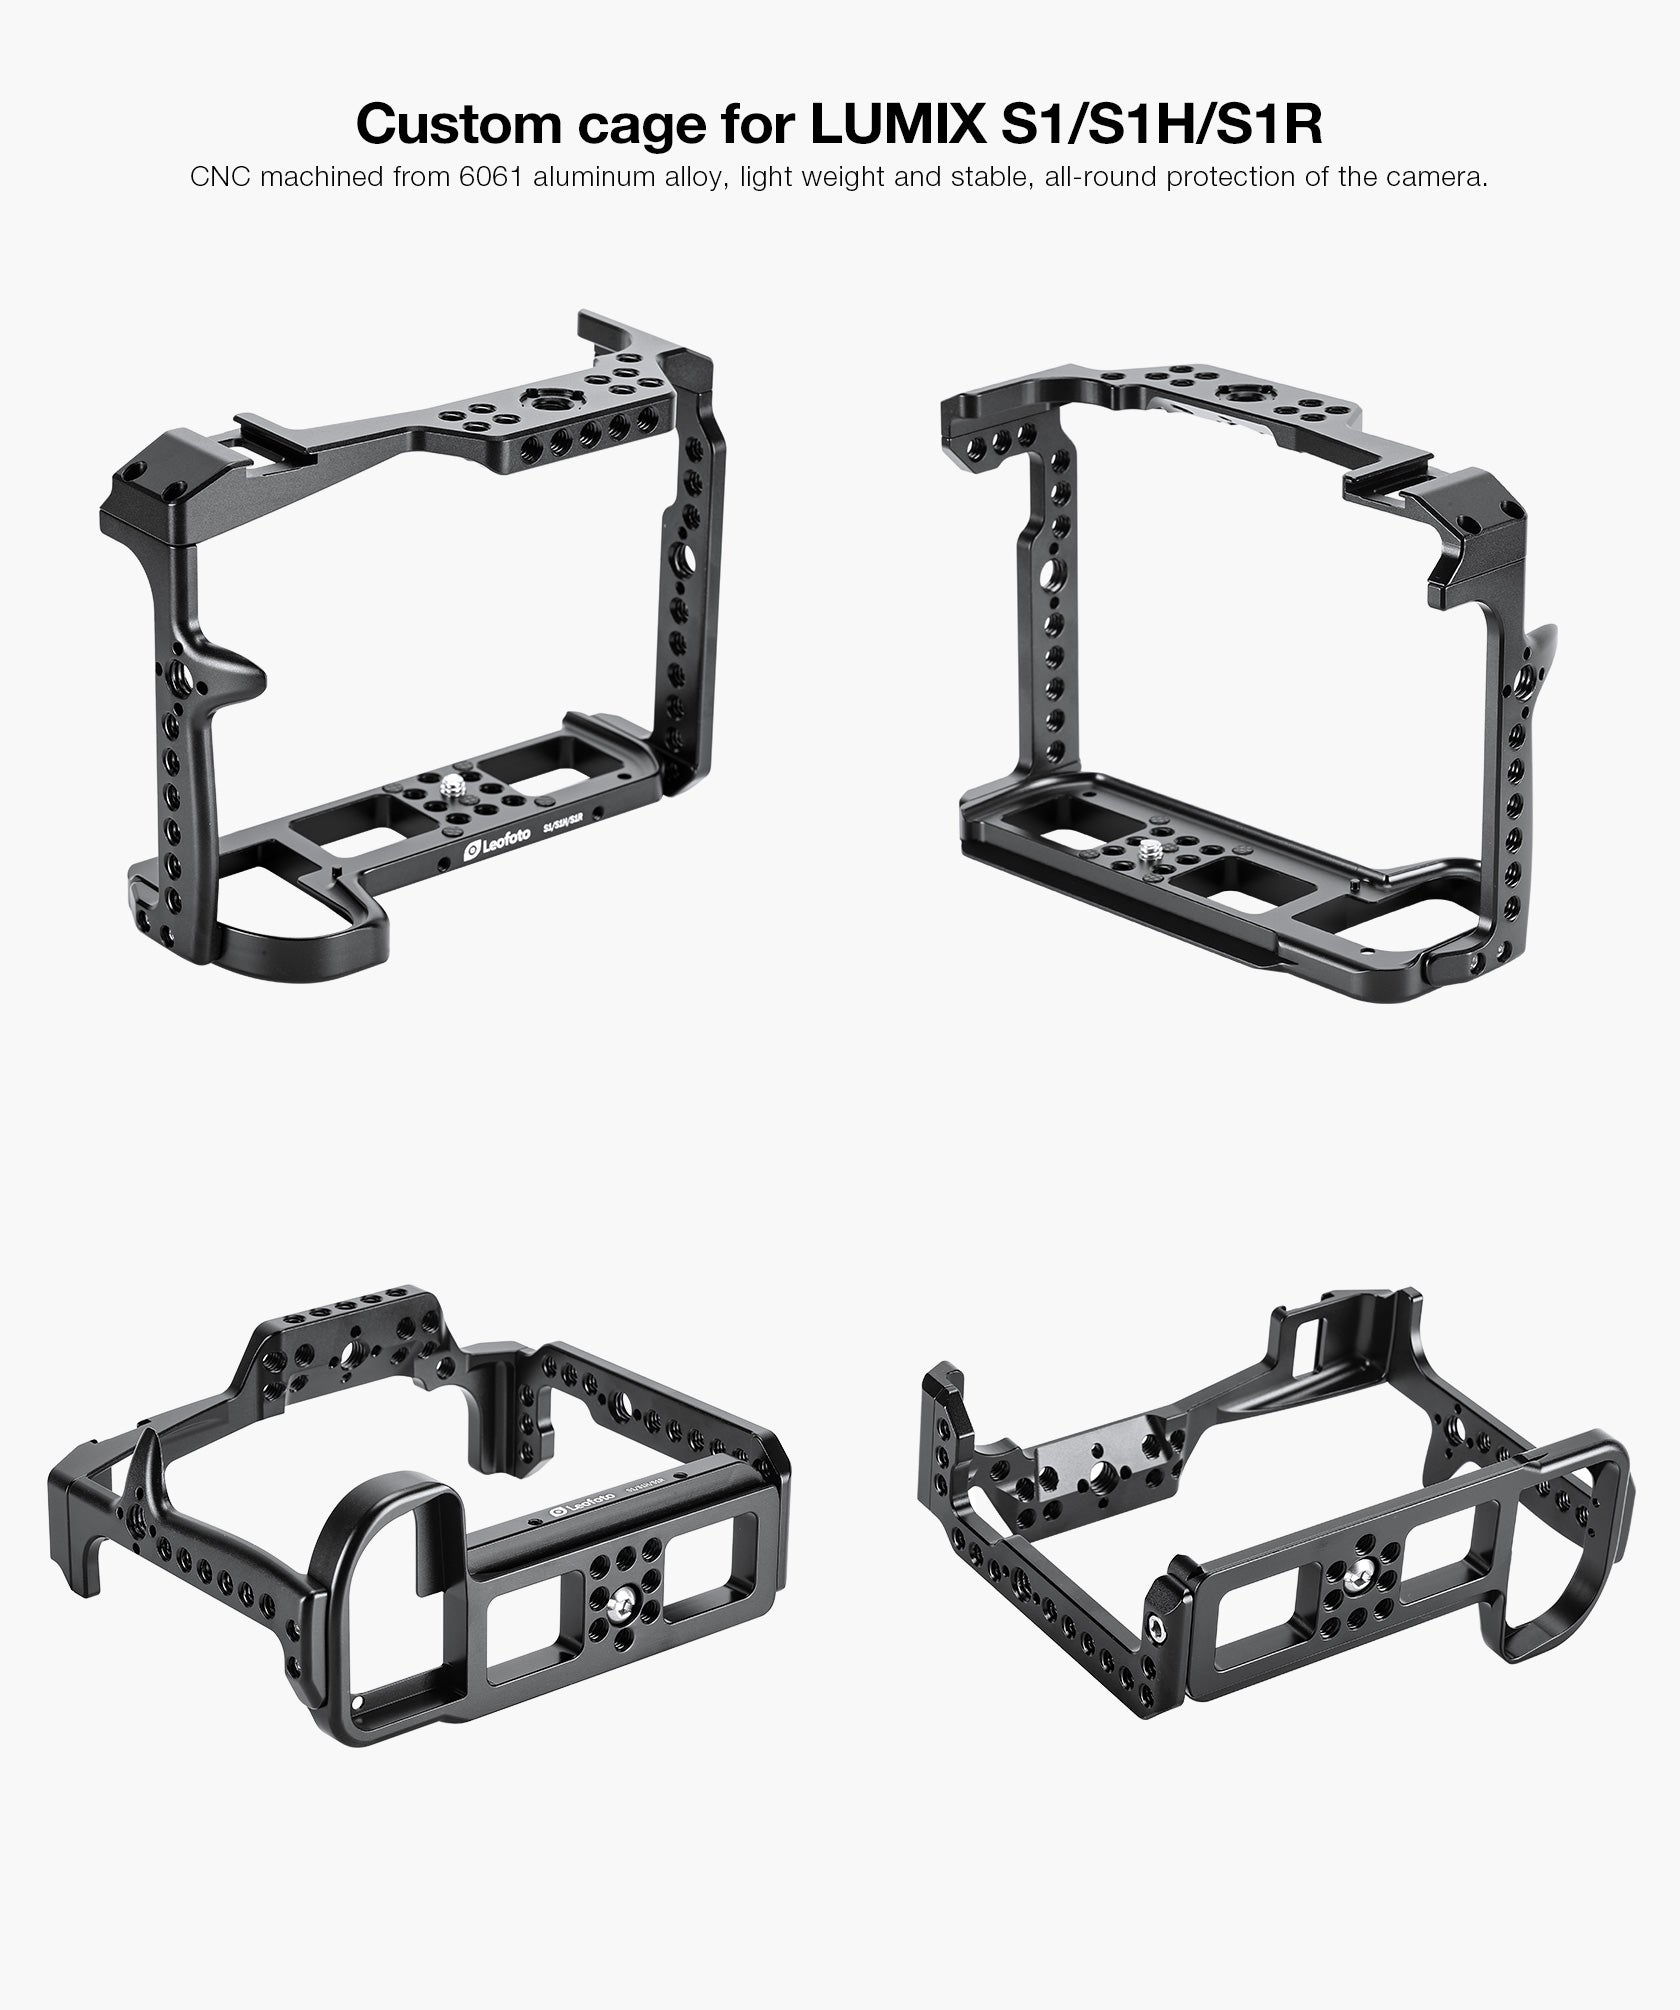 Leofoto S1/S1H/S1R Camera Cage for Panasonic Lumix S1/S1H/S1R